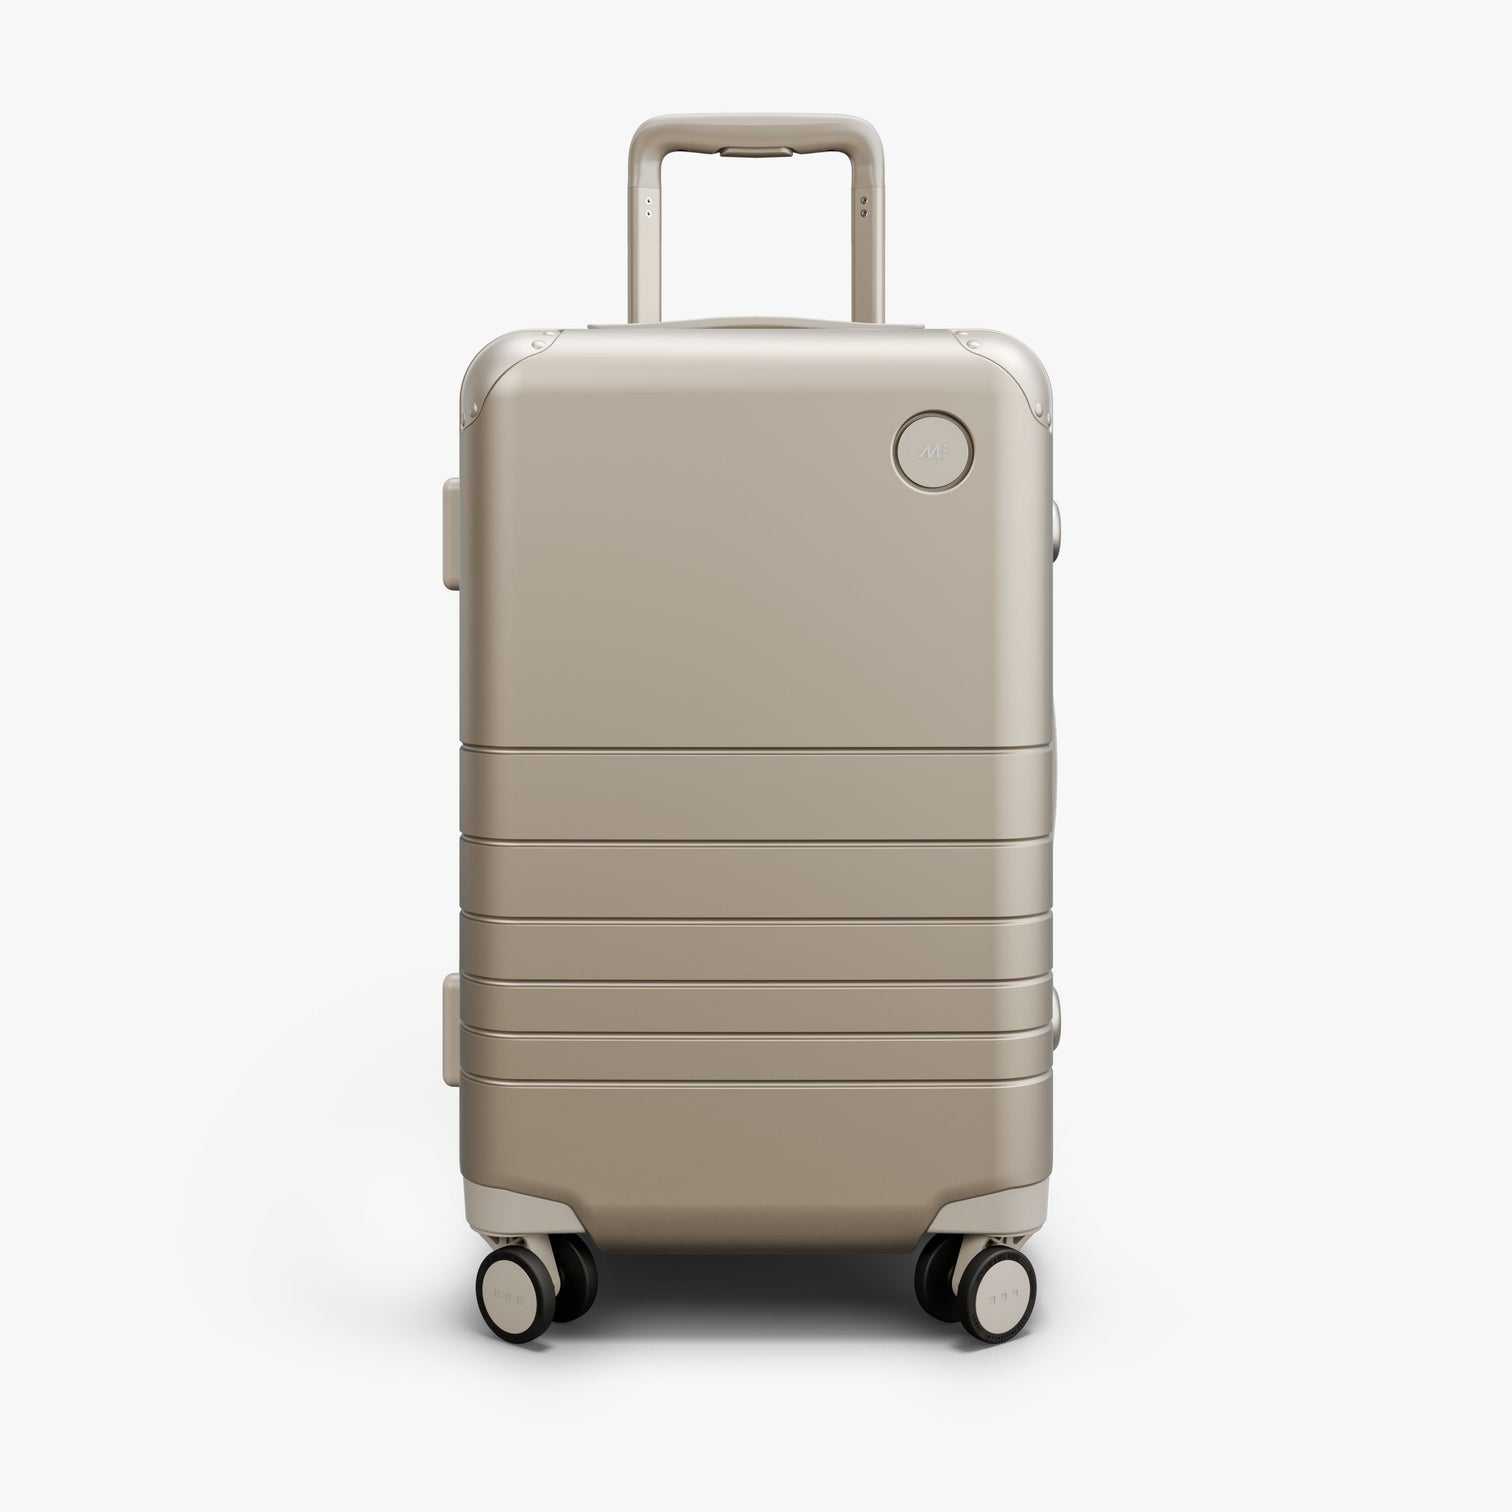 Monos Hybrid Carry-On Luggage